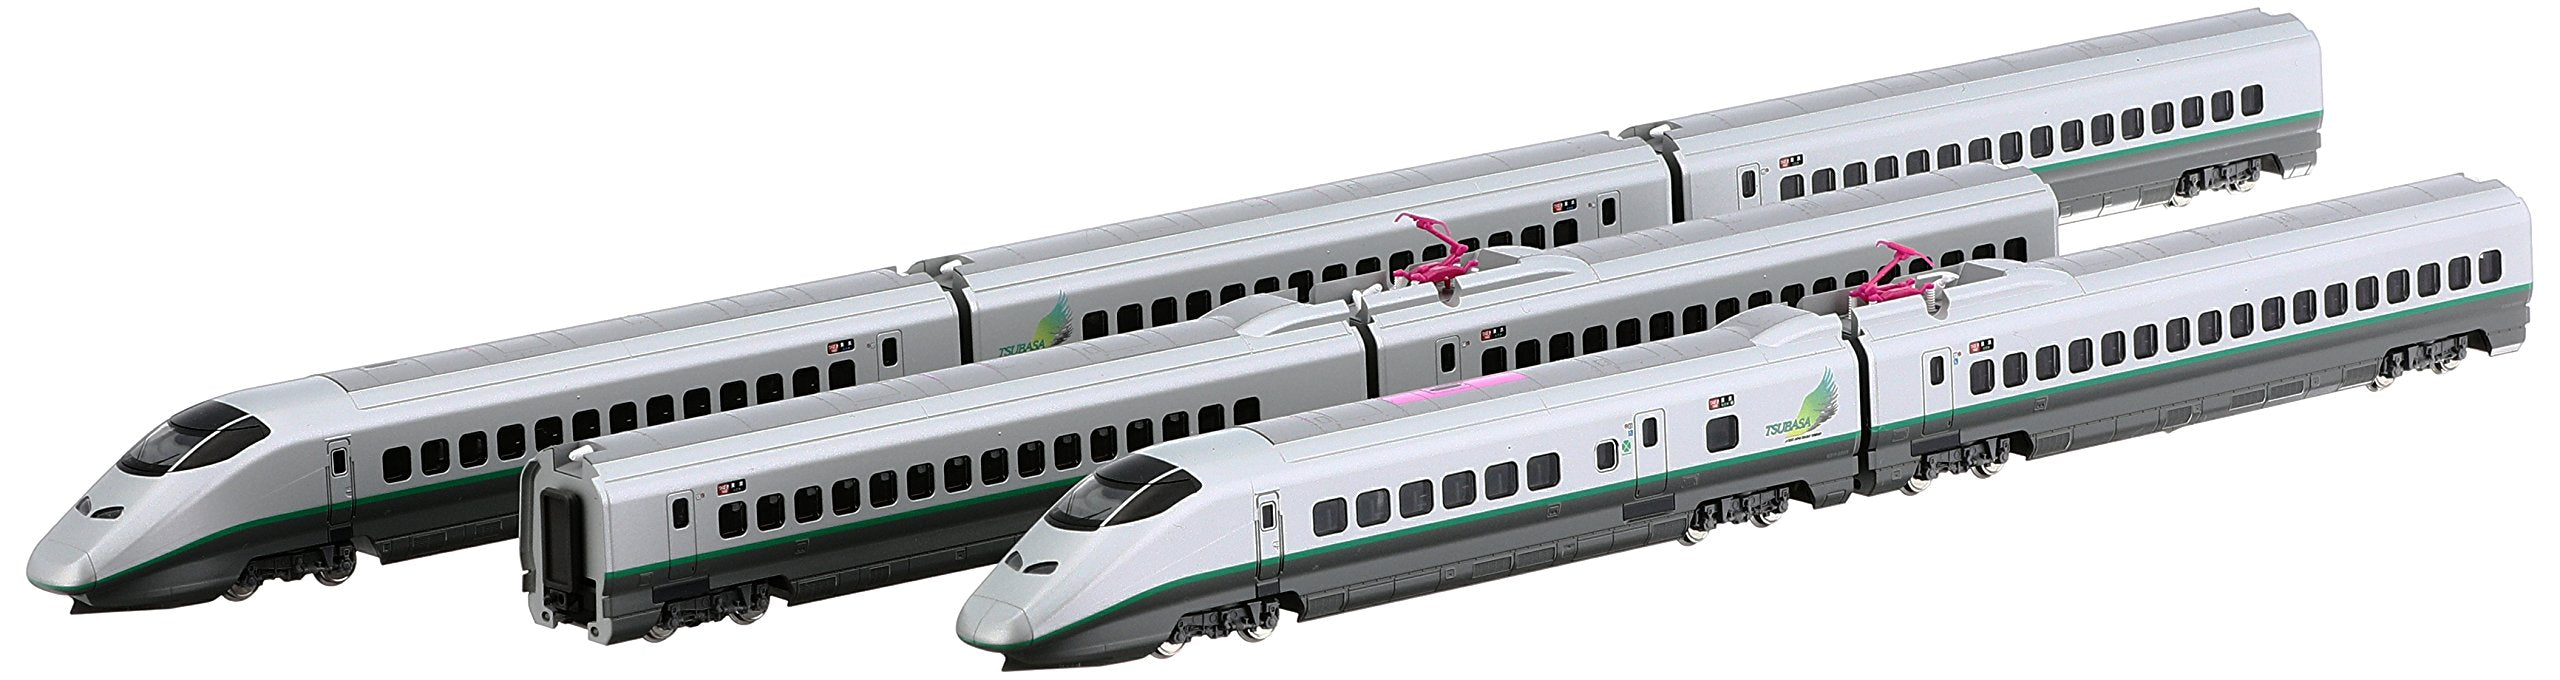 KATO 10-1289 Serie E3-2000 Yamagata Shinkansen 'Tsubasa' 7 Wagen Set Spur N